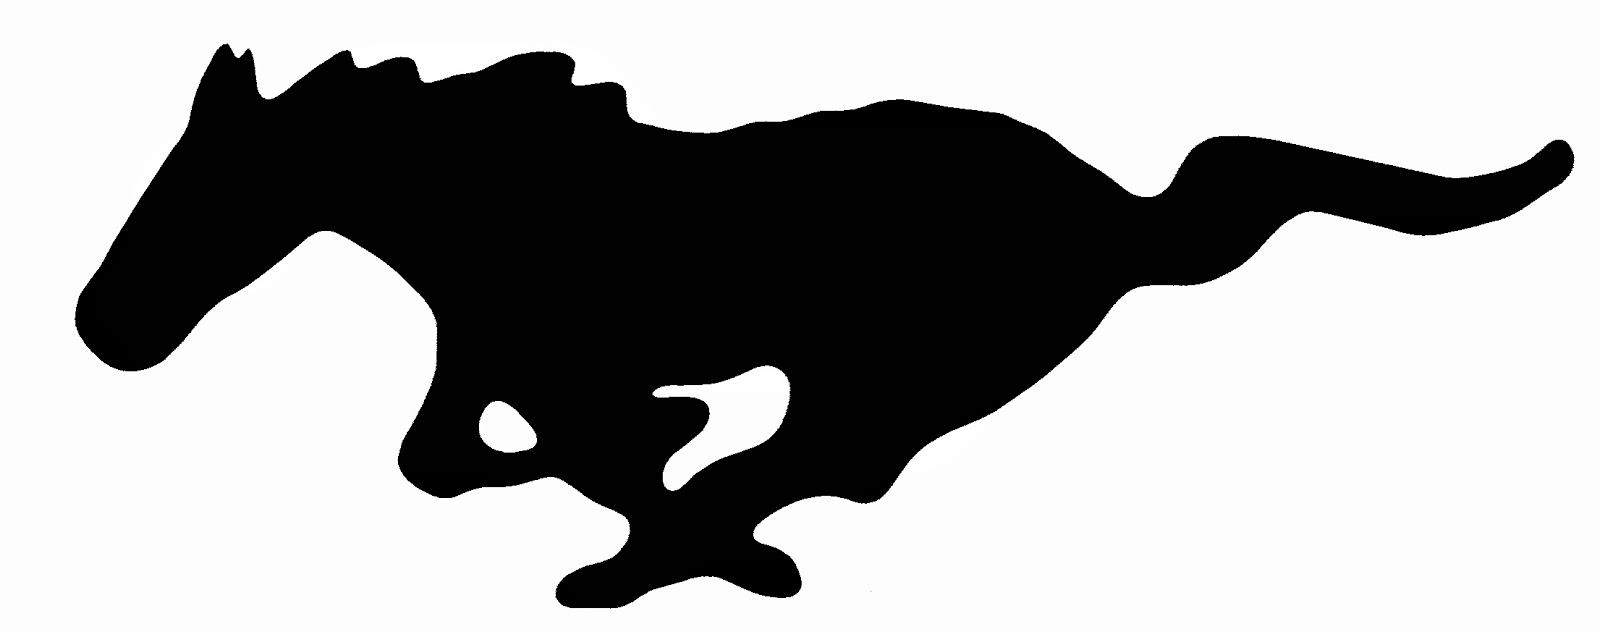 Ford mustang logo vector #9